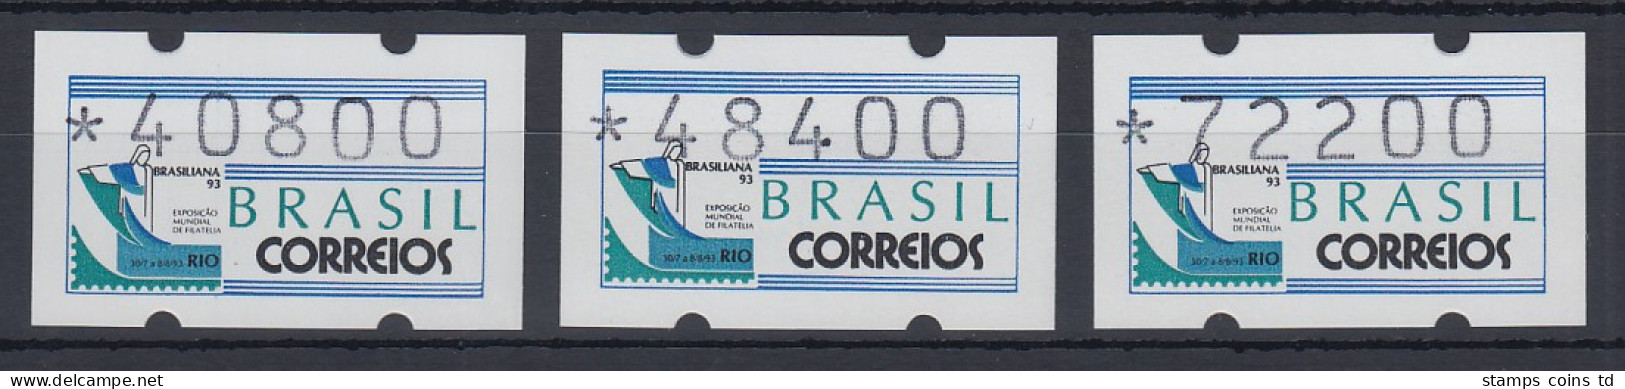 Brasilien Klüssendorf-ATM 1993 BRASILIANA Mi-Nr 5 Satz 40800 - 48400 - 72200 ** - Franking Labels